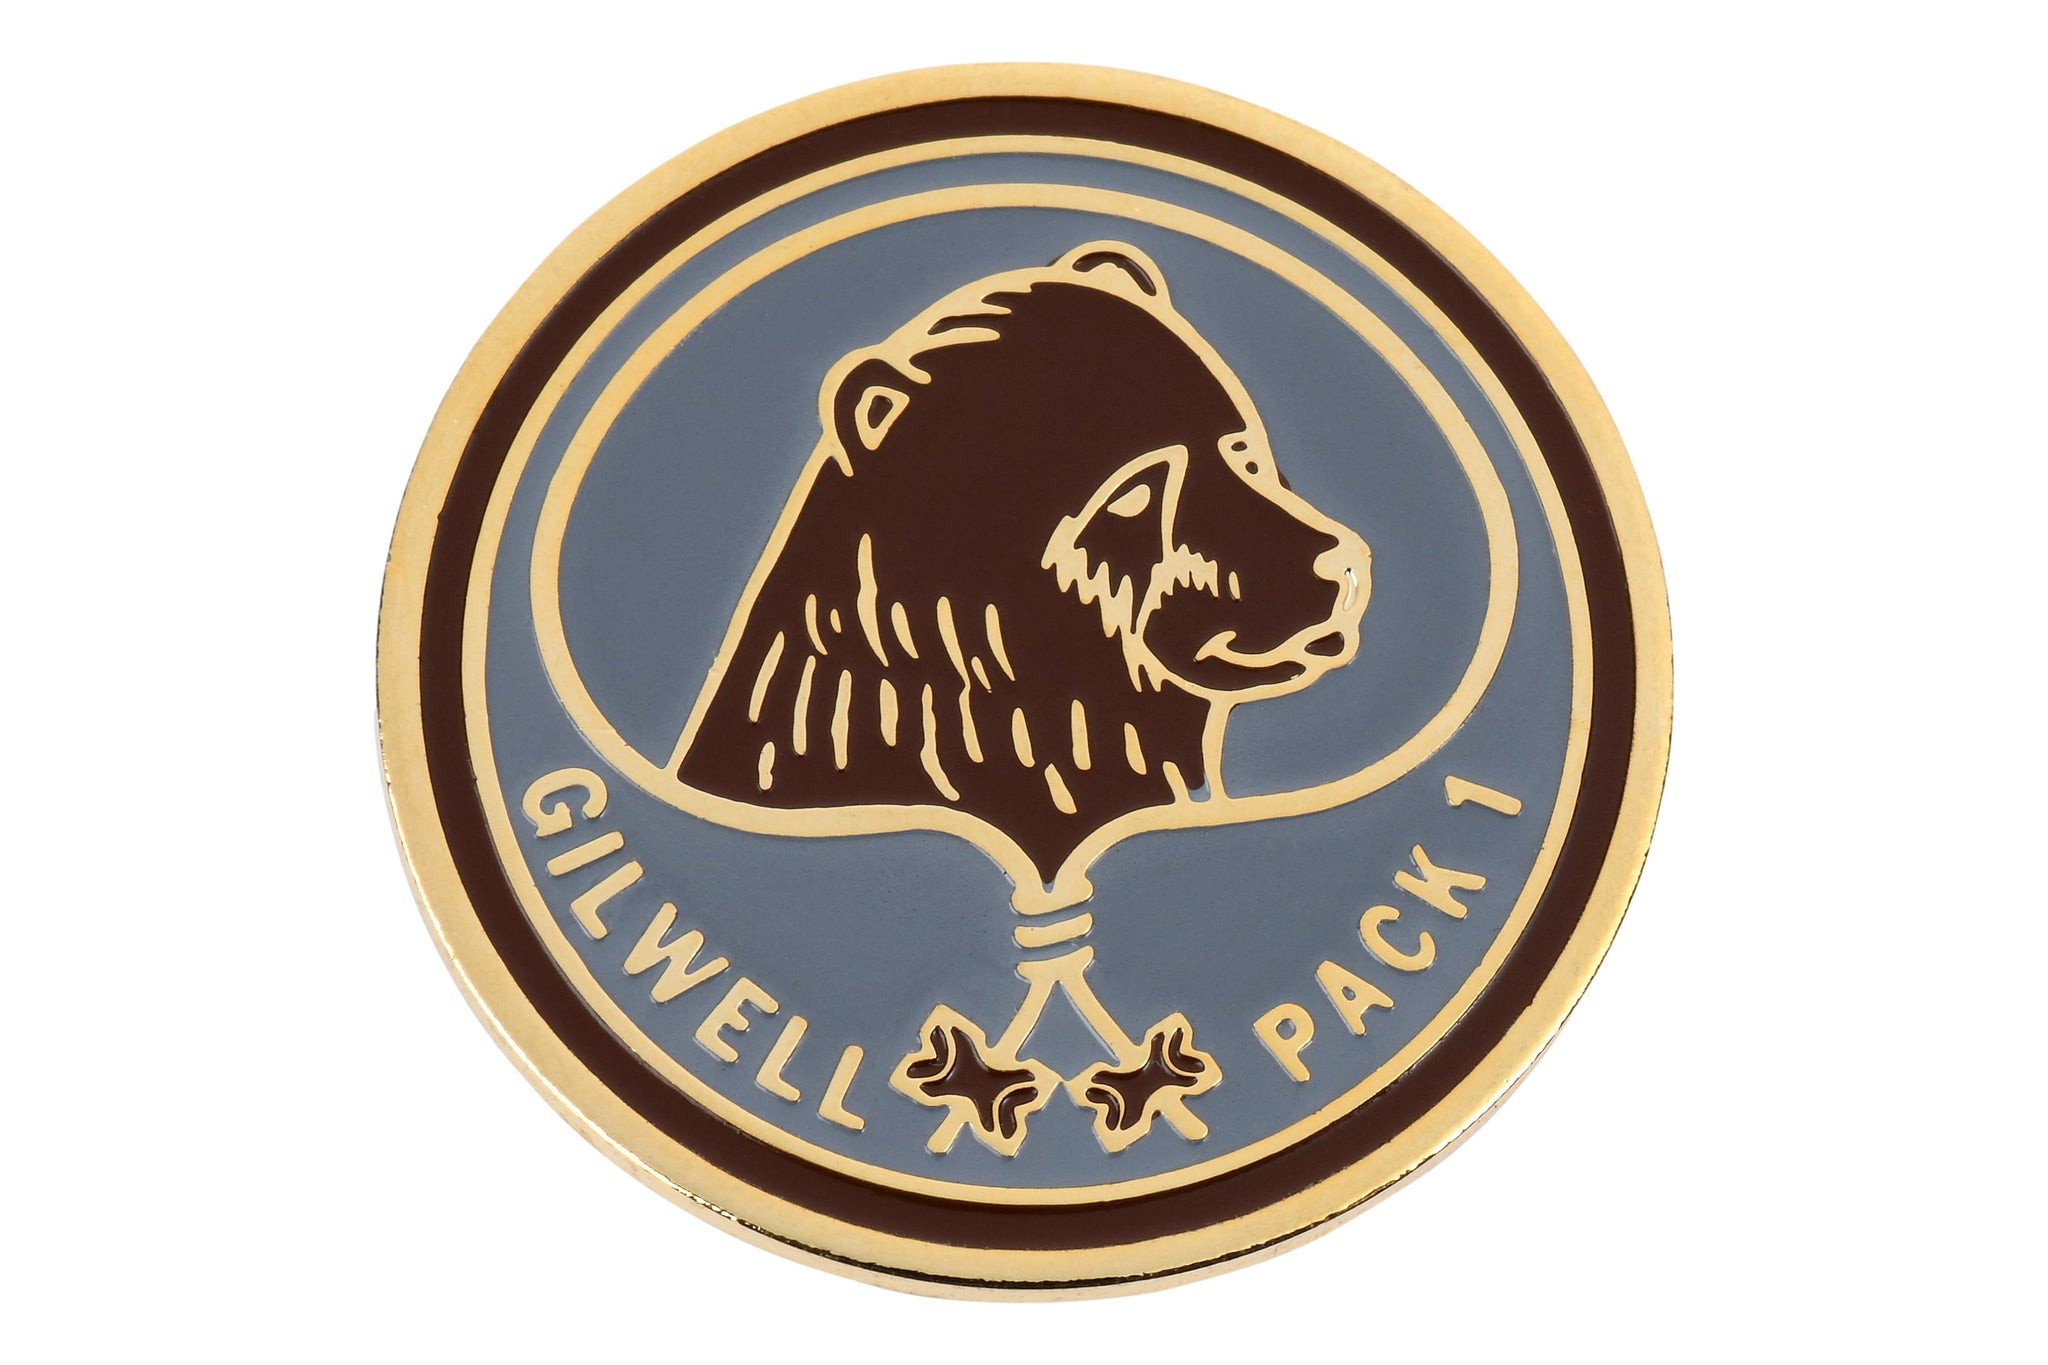 Bear Gilwell Pack 1 Pin